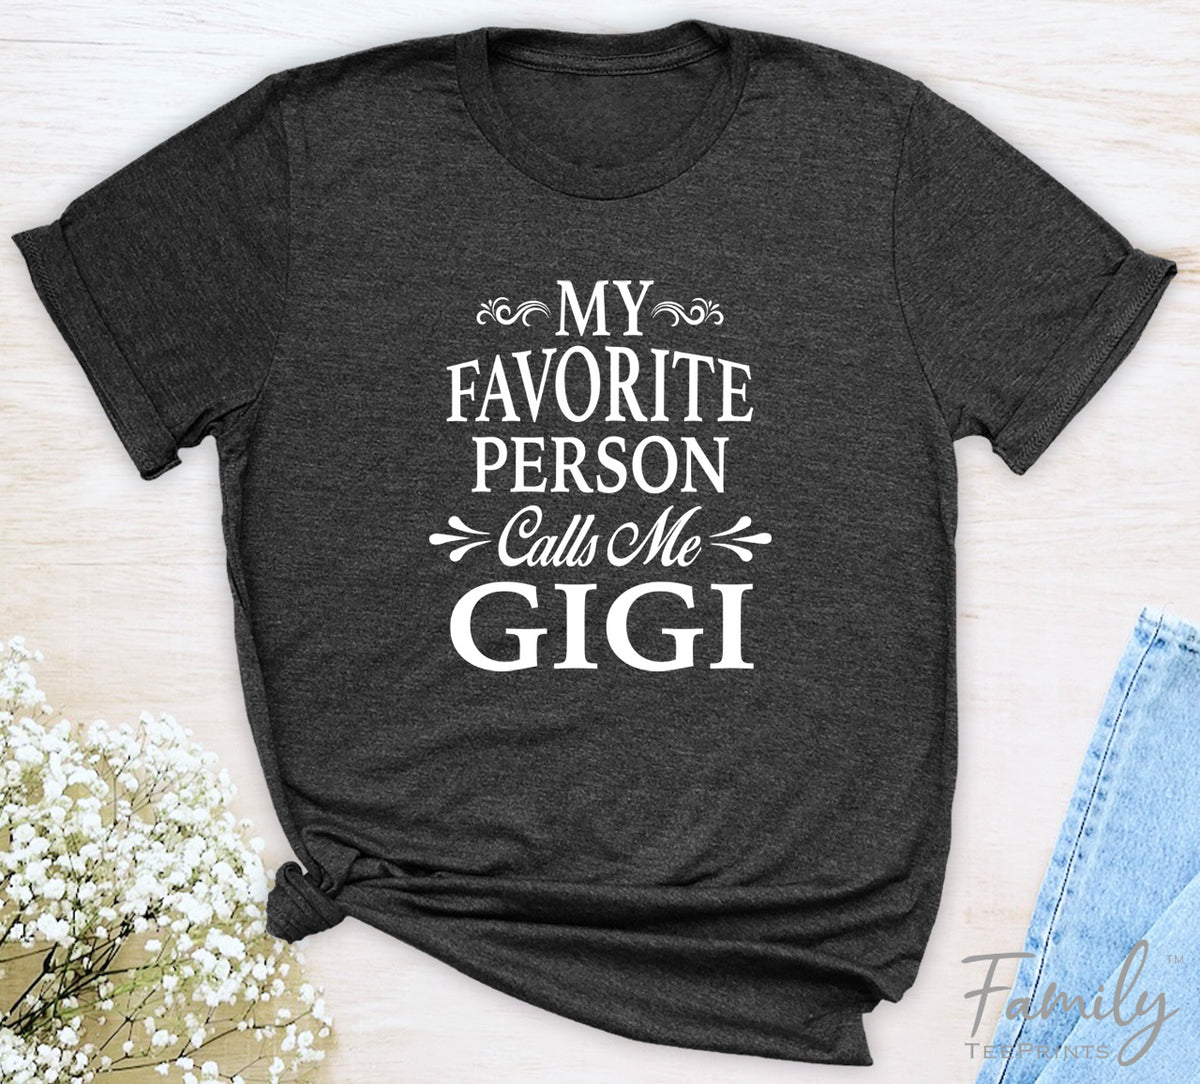 My Favorite Person Calls Me Gigi - Unisex T-shirt - Gigi Shirt - Gift For Gigi - familyteeprints